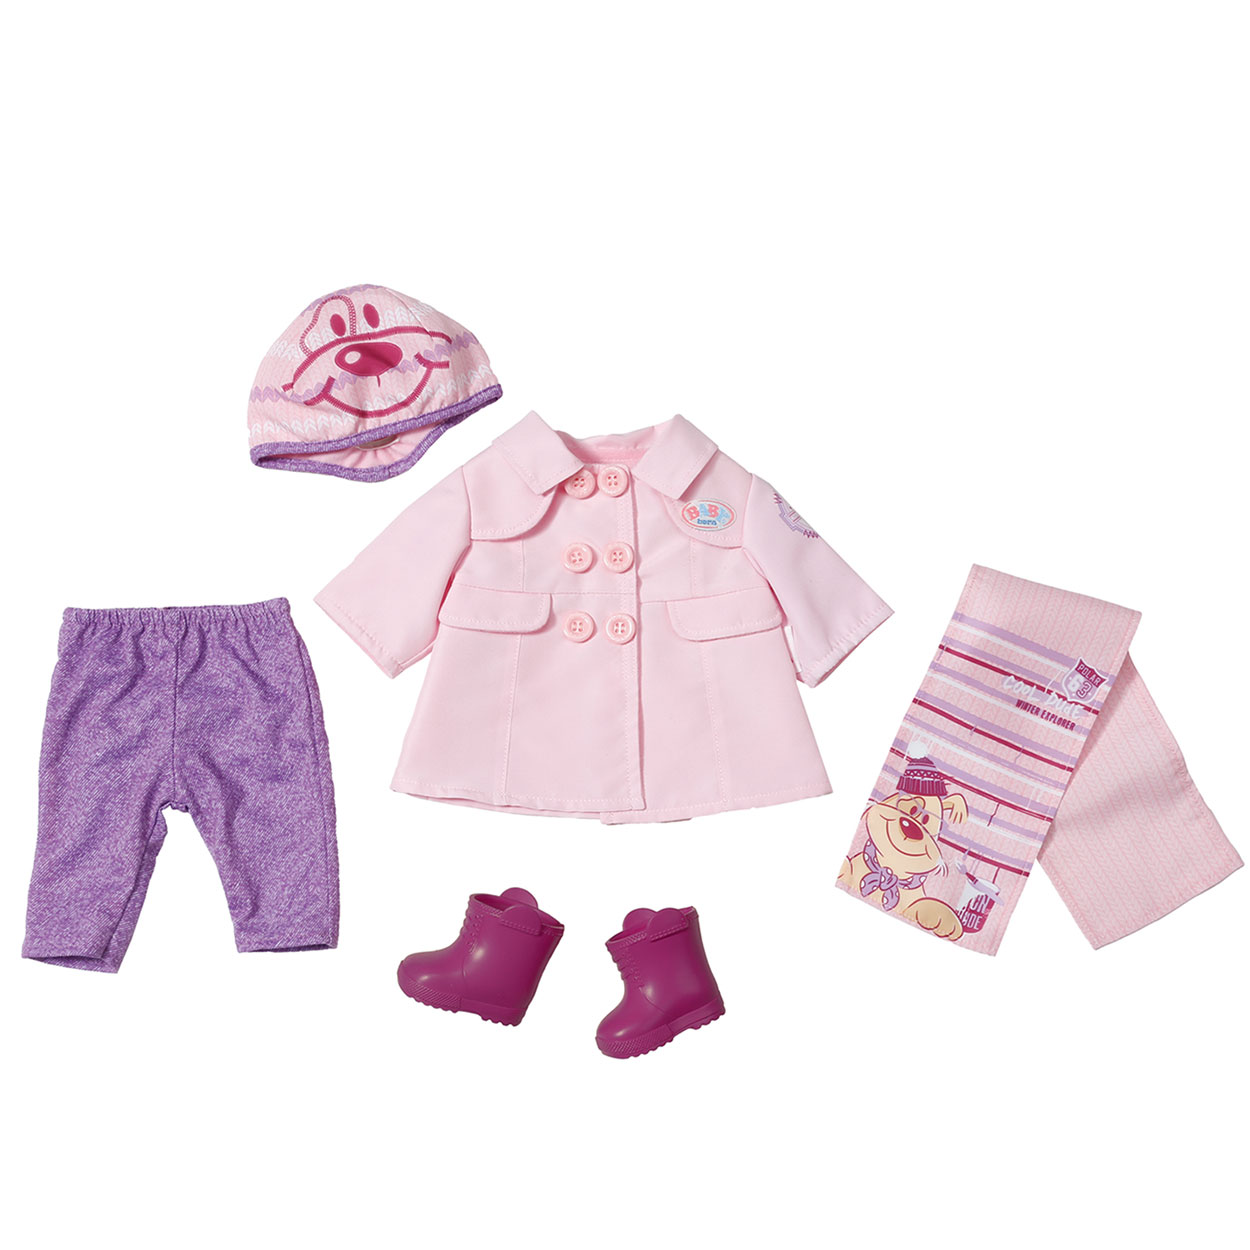 Zapf Creation комплект одежды для куклы Baby born 823828